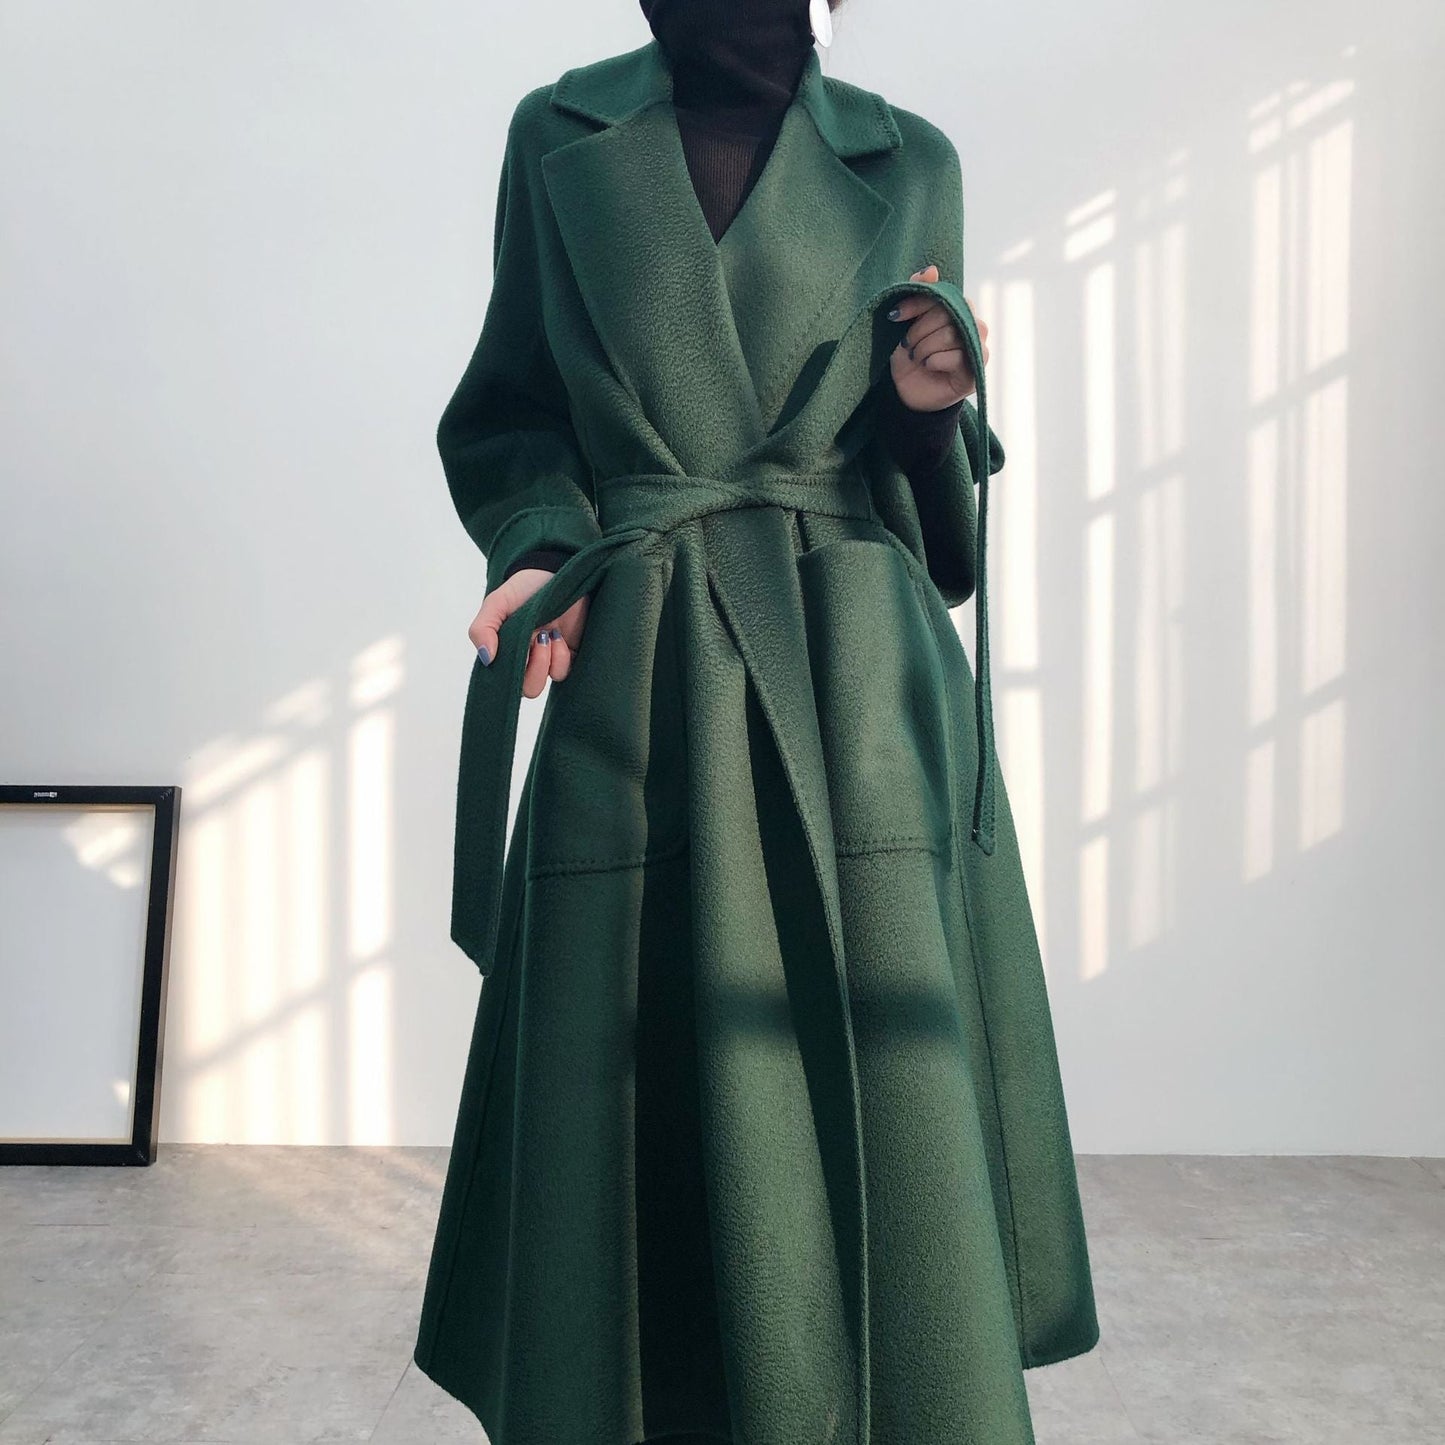 Luxury Woolen Winter Long Overcoat for Women-Outerwear-Green-S-Free Shipping Leatheretro